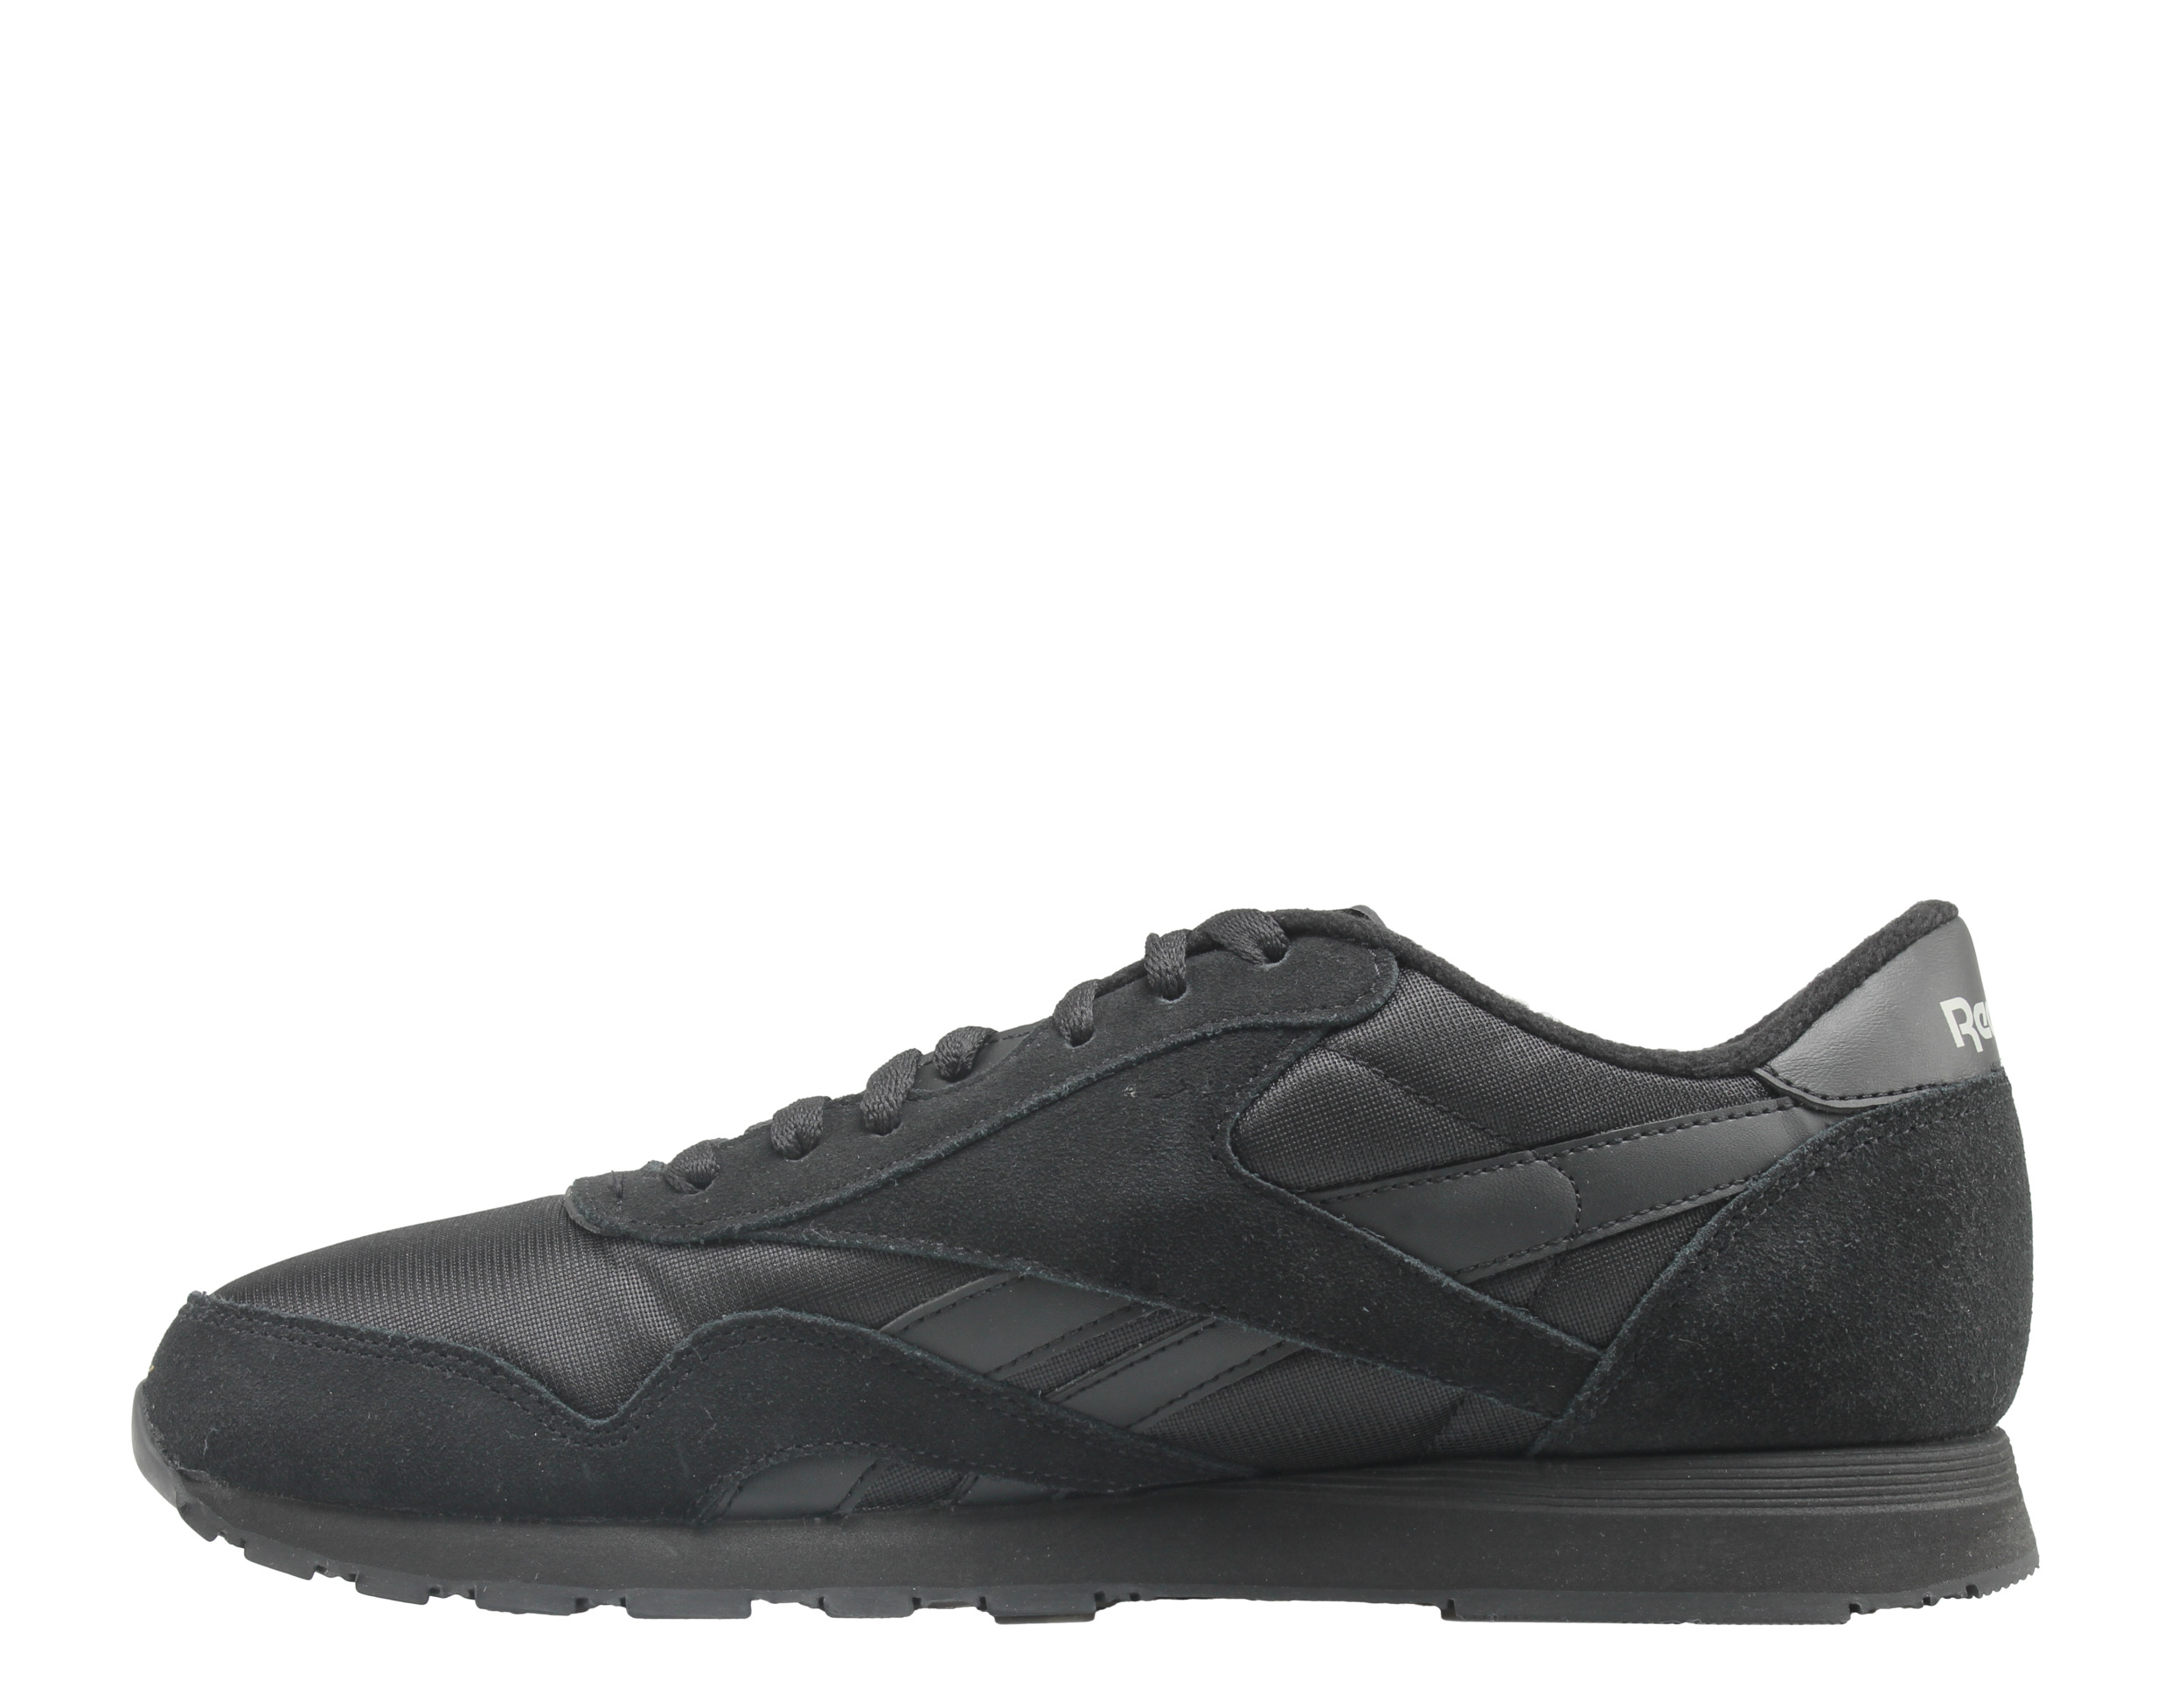 Reebok Classic Nylon Men's Running Shoes Size 9 - image 3 of 6